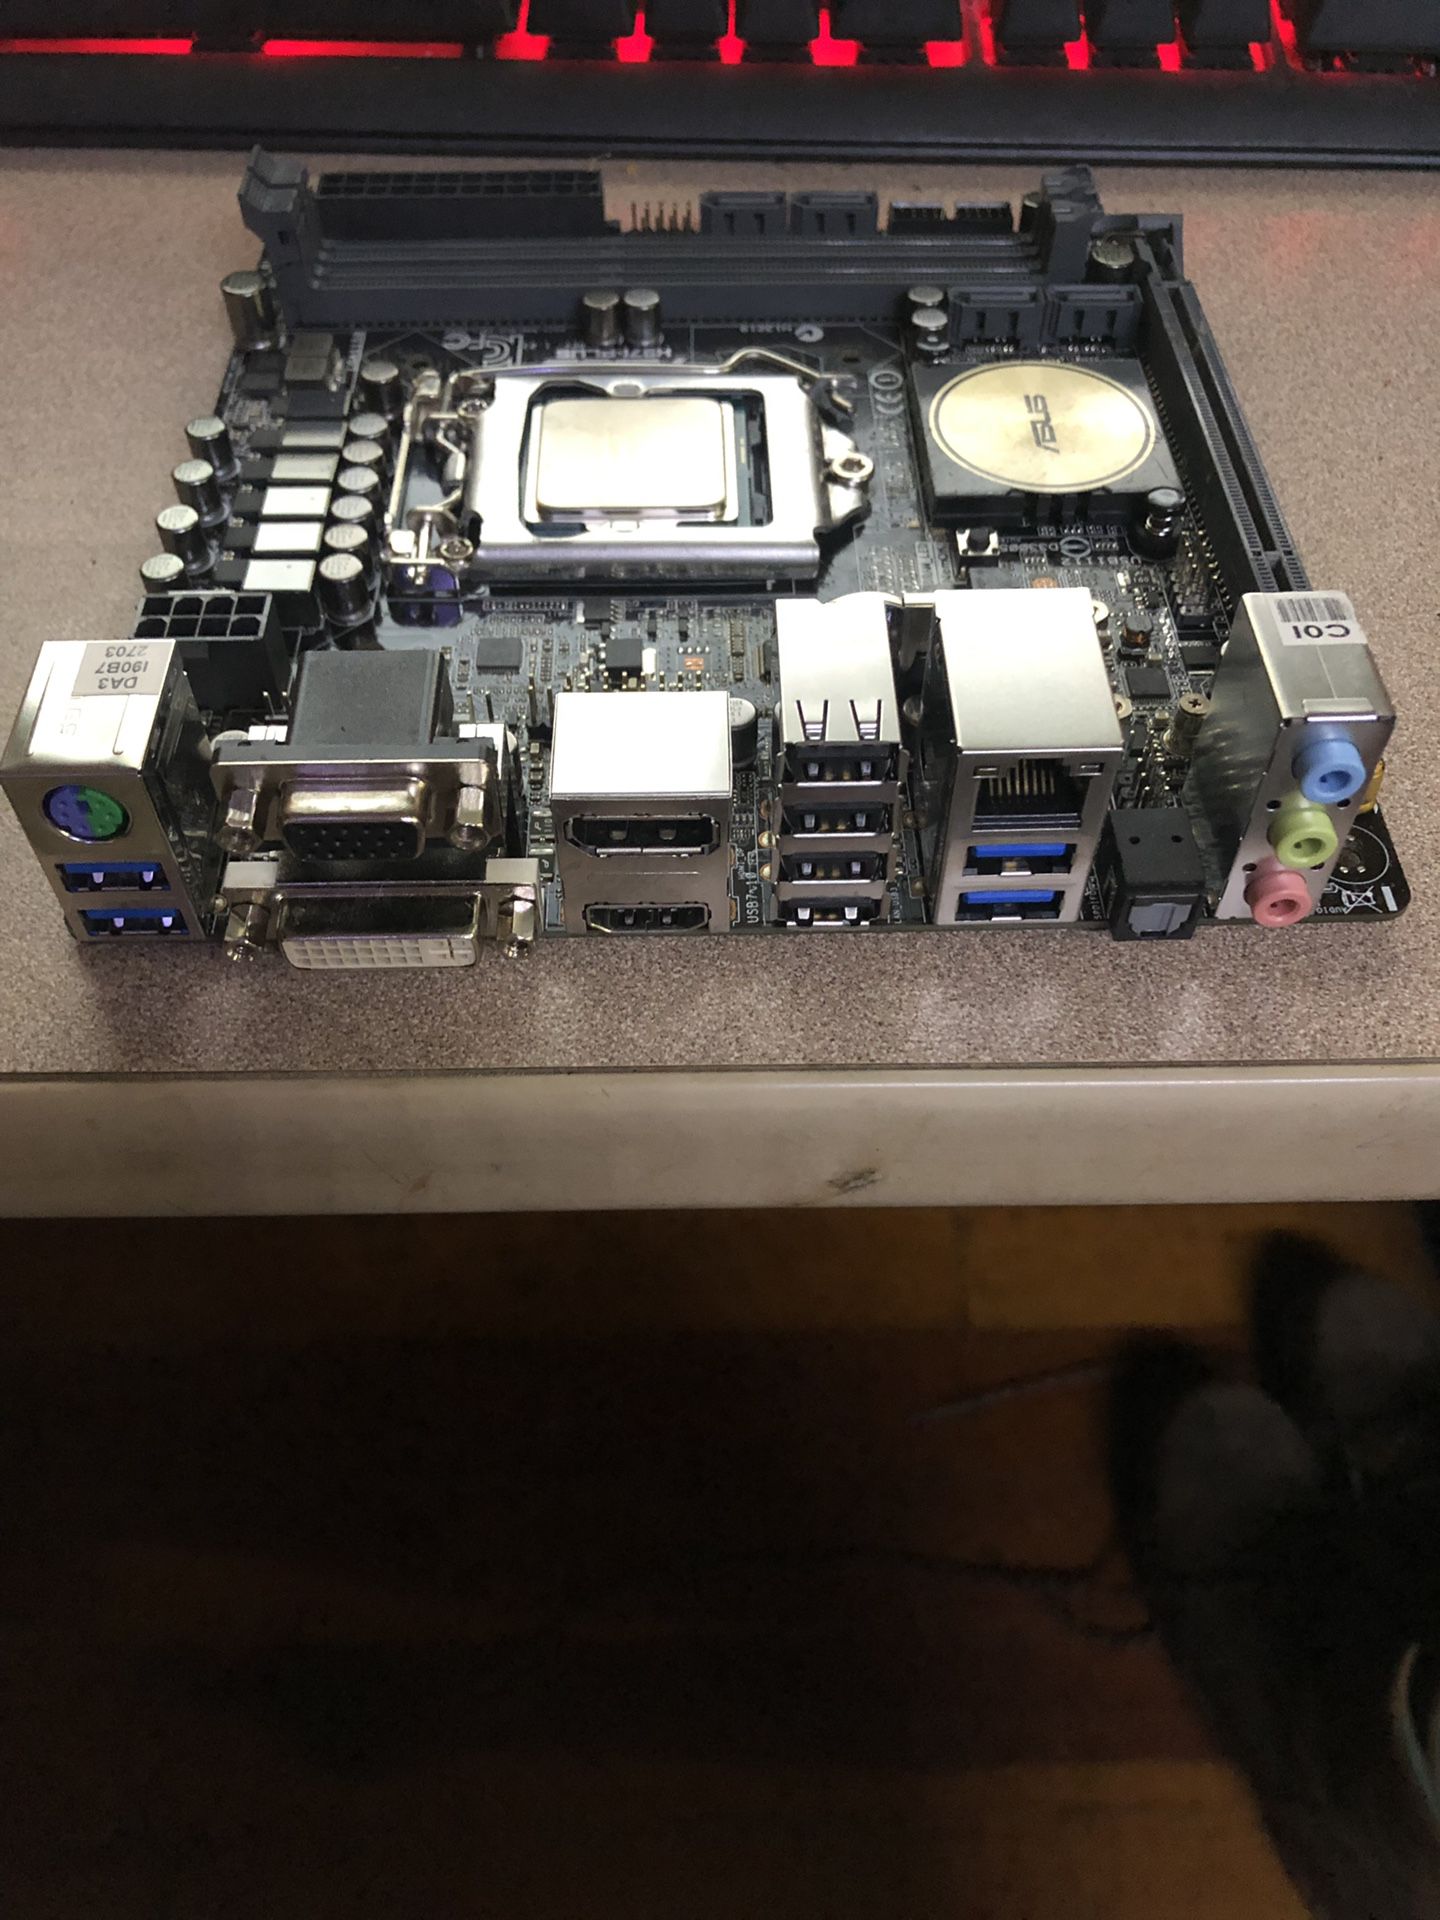 I7 Motherboard, CPU and cooler set